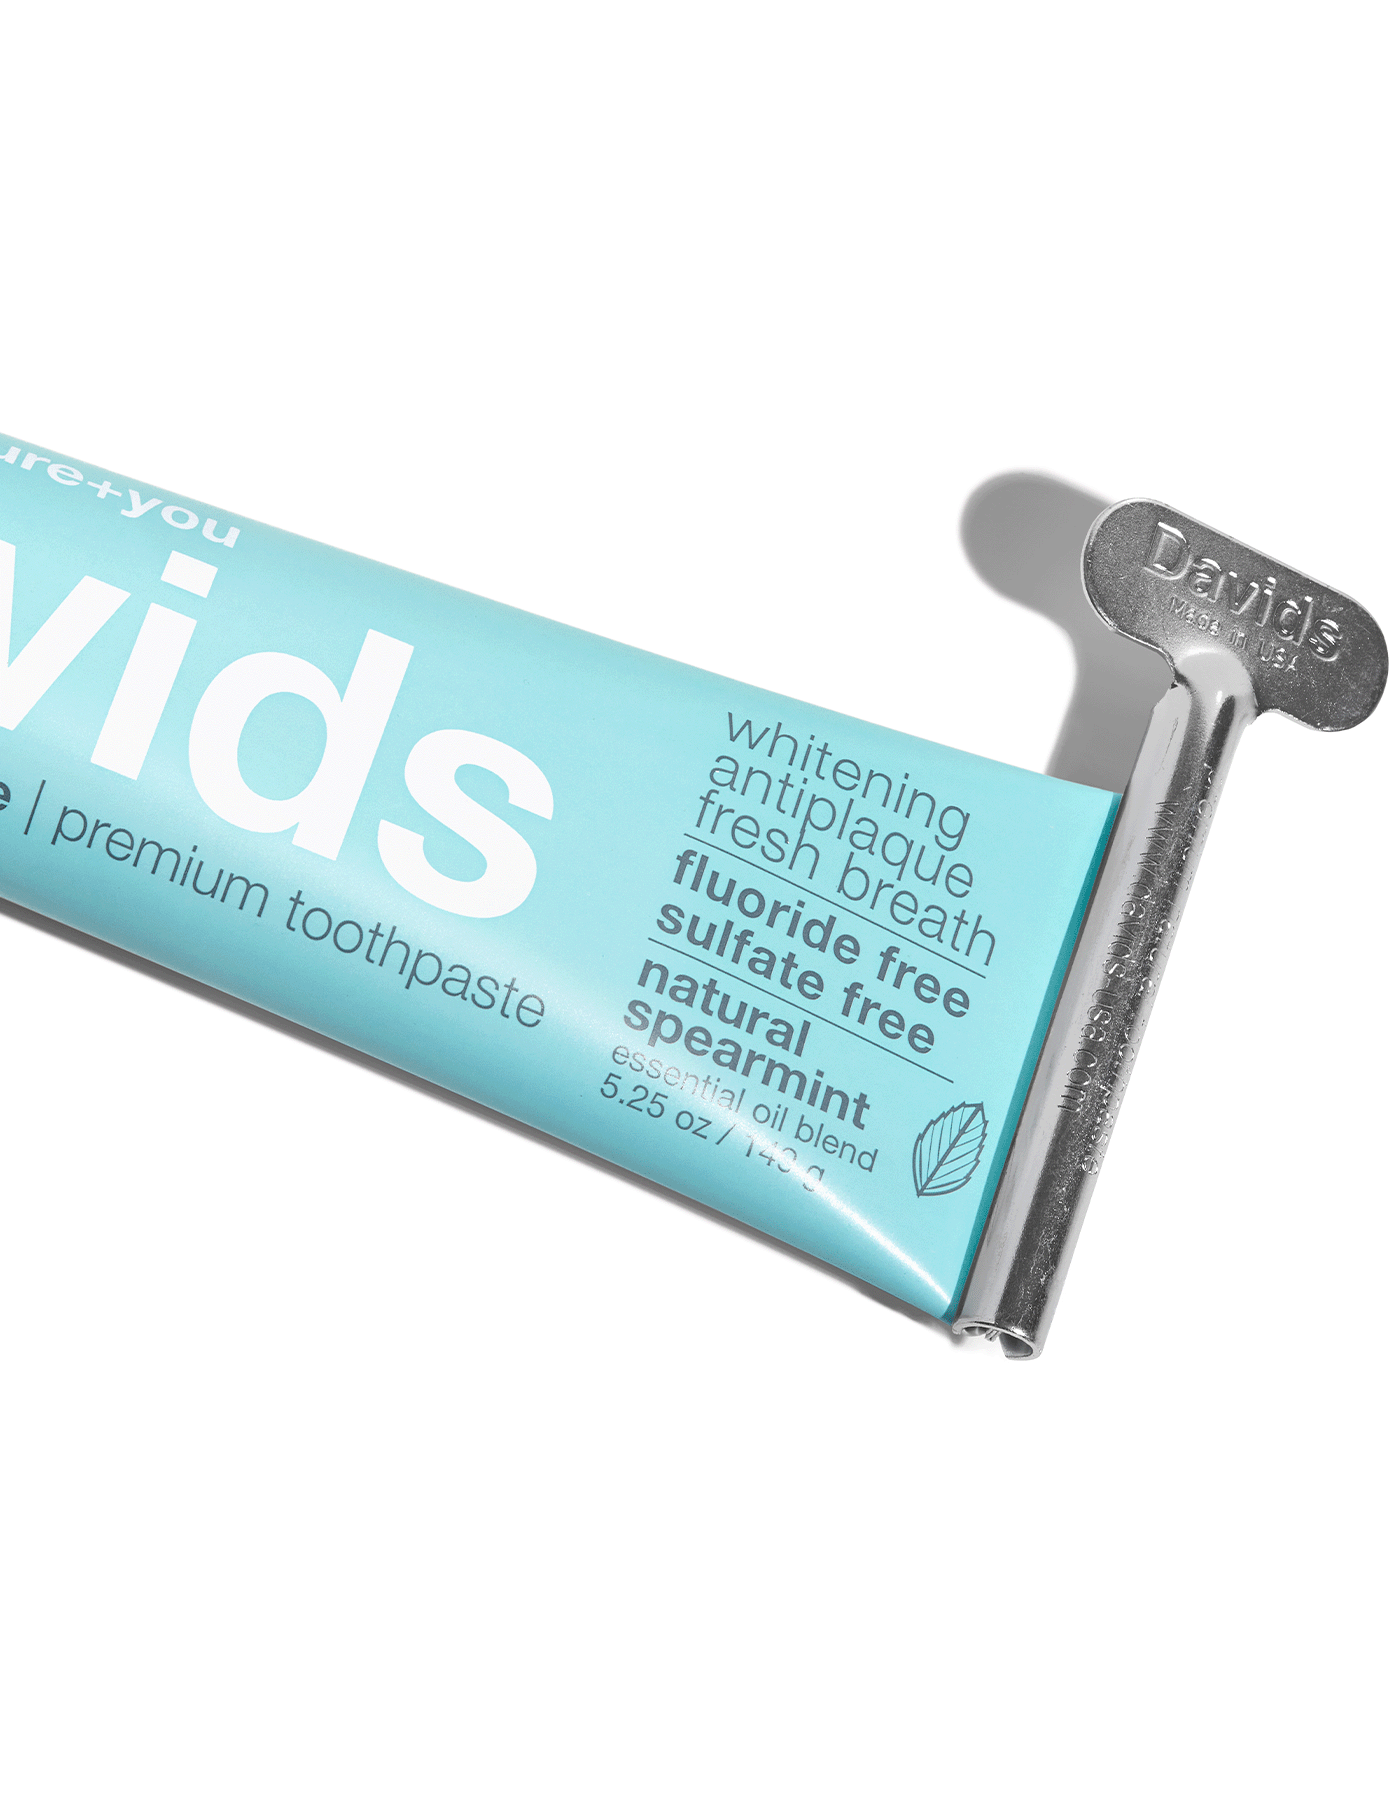 Davids premium toothpaste  /  spearmint